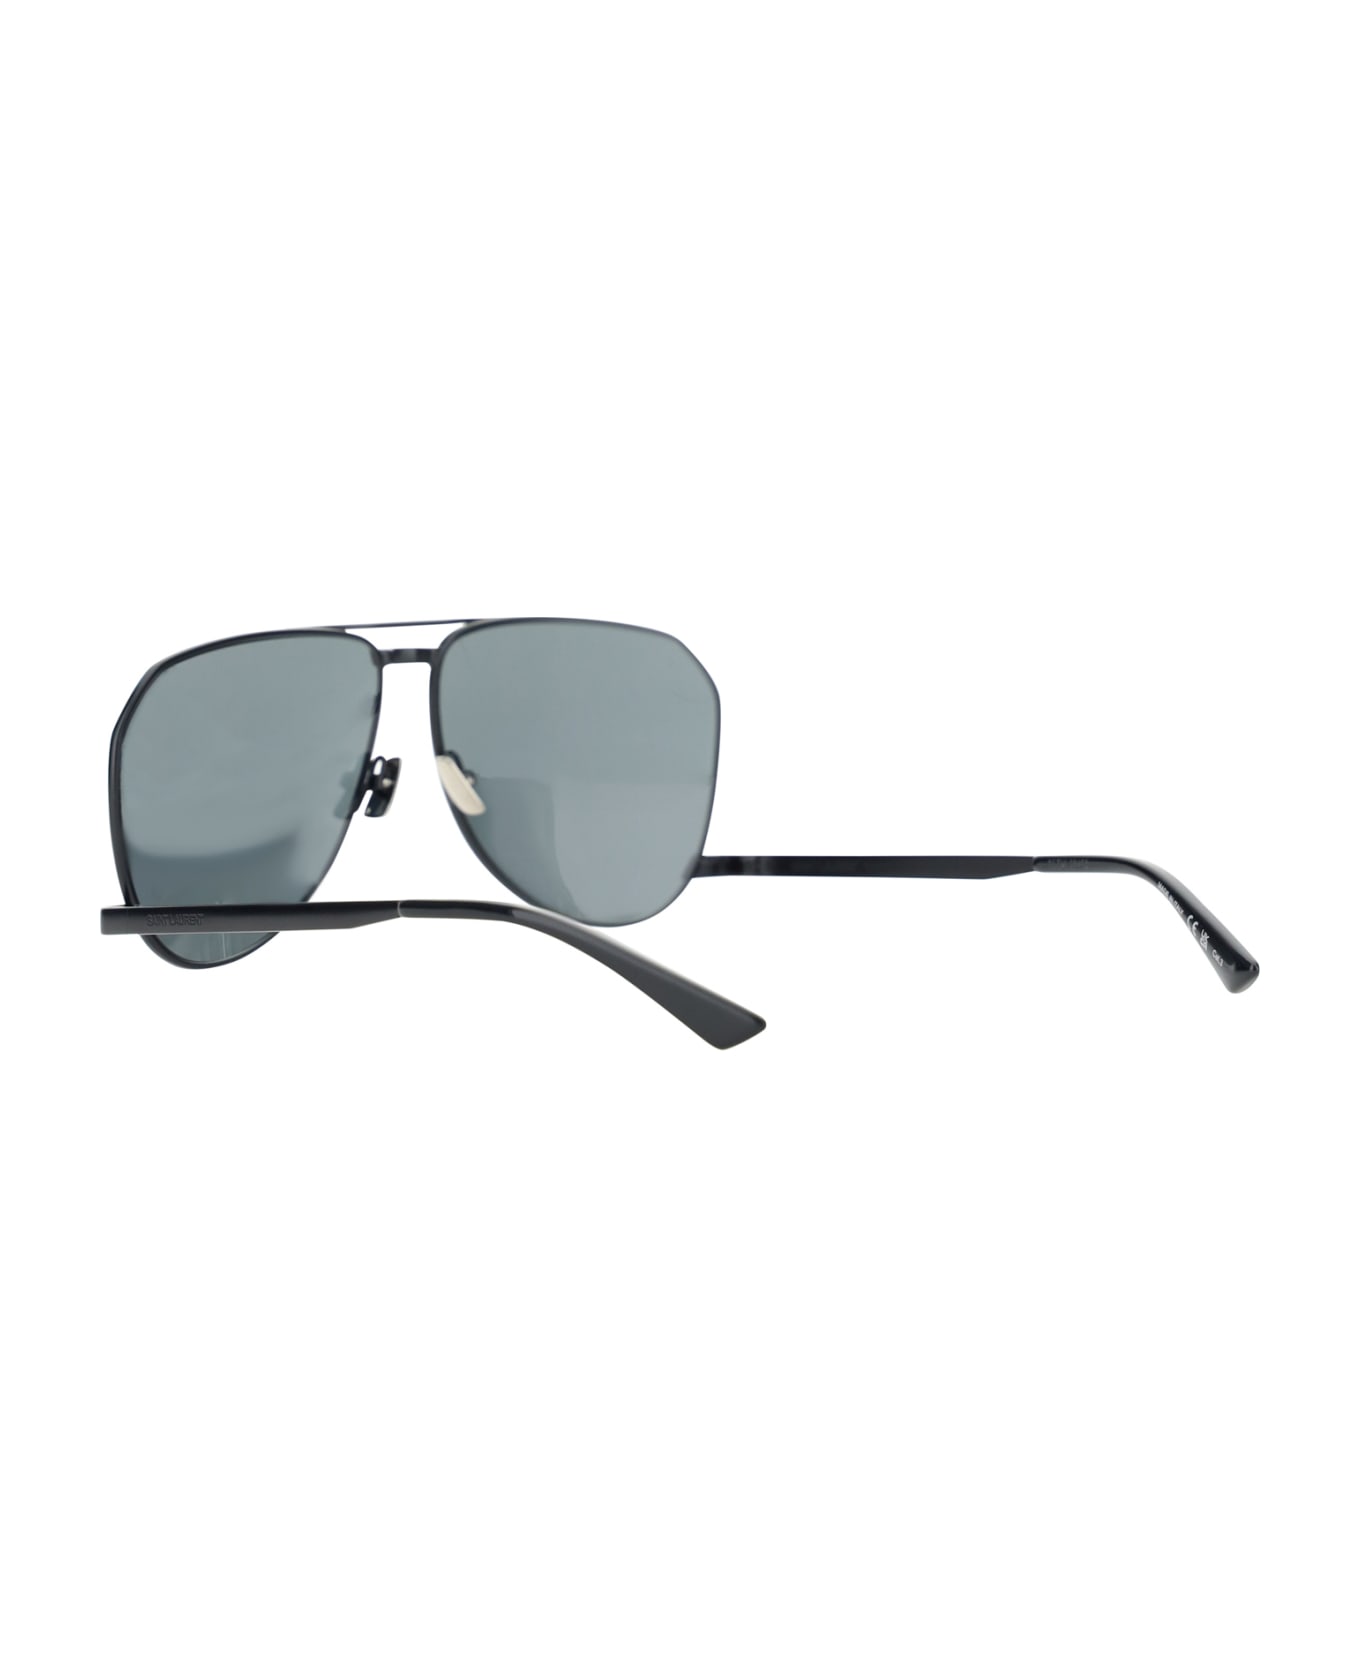 Saint Laurent Eyewear Sunglasses - Metal Black